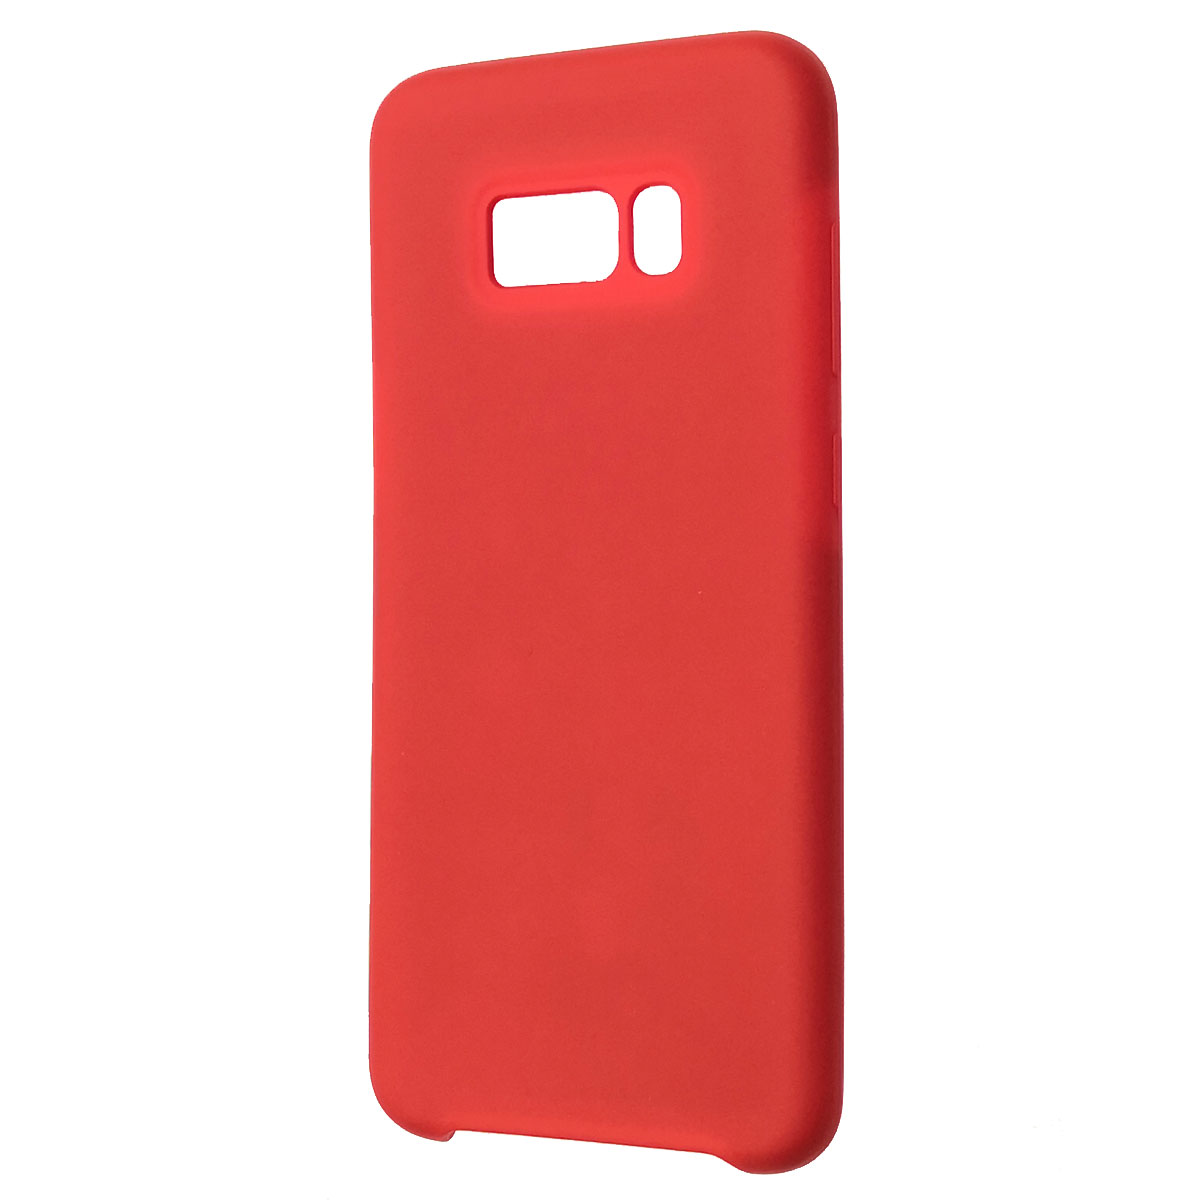 Чехол накладка Silicon Cover для SAMSUNG Galaxy S8 Plus (SM-G955), силикон, цвет красный